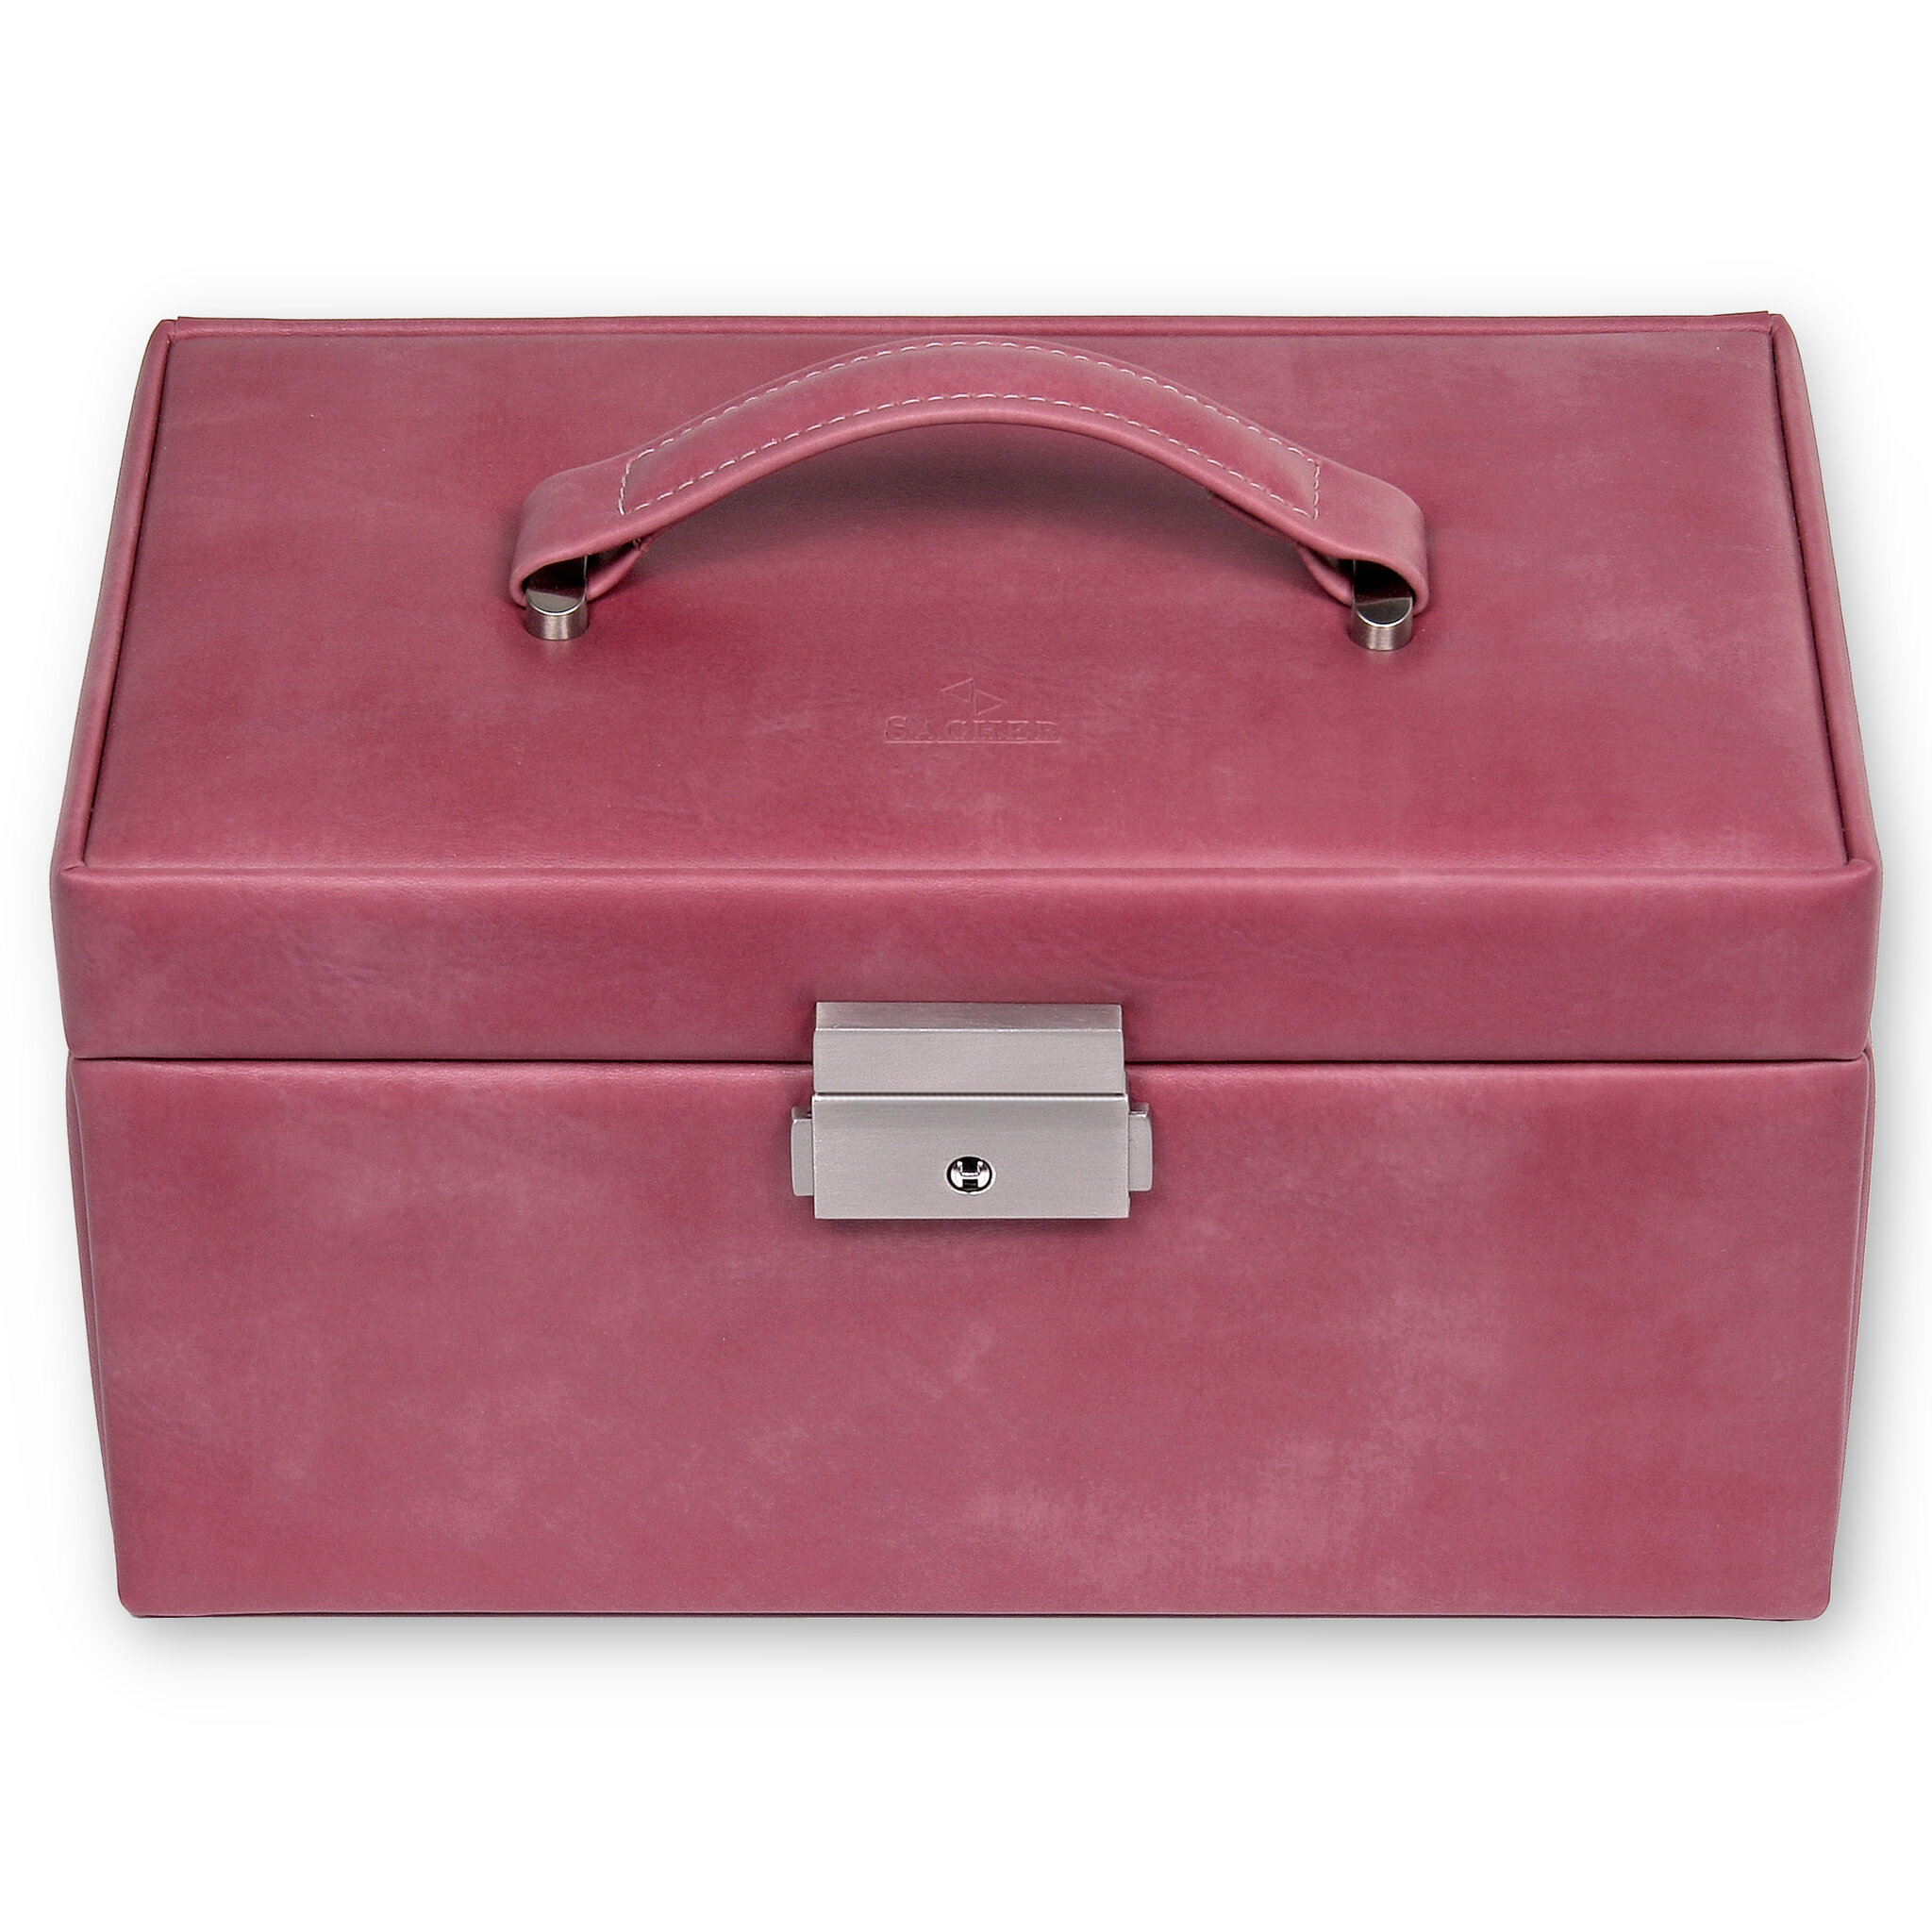 Jewellery box Elly pastello / old rosé